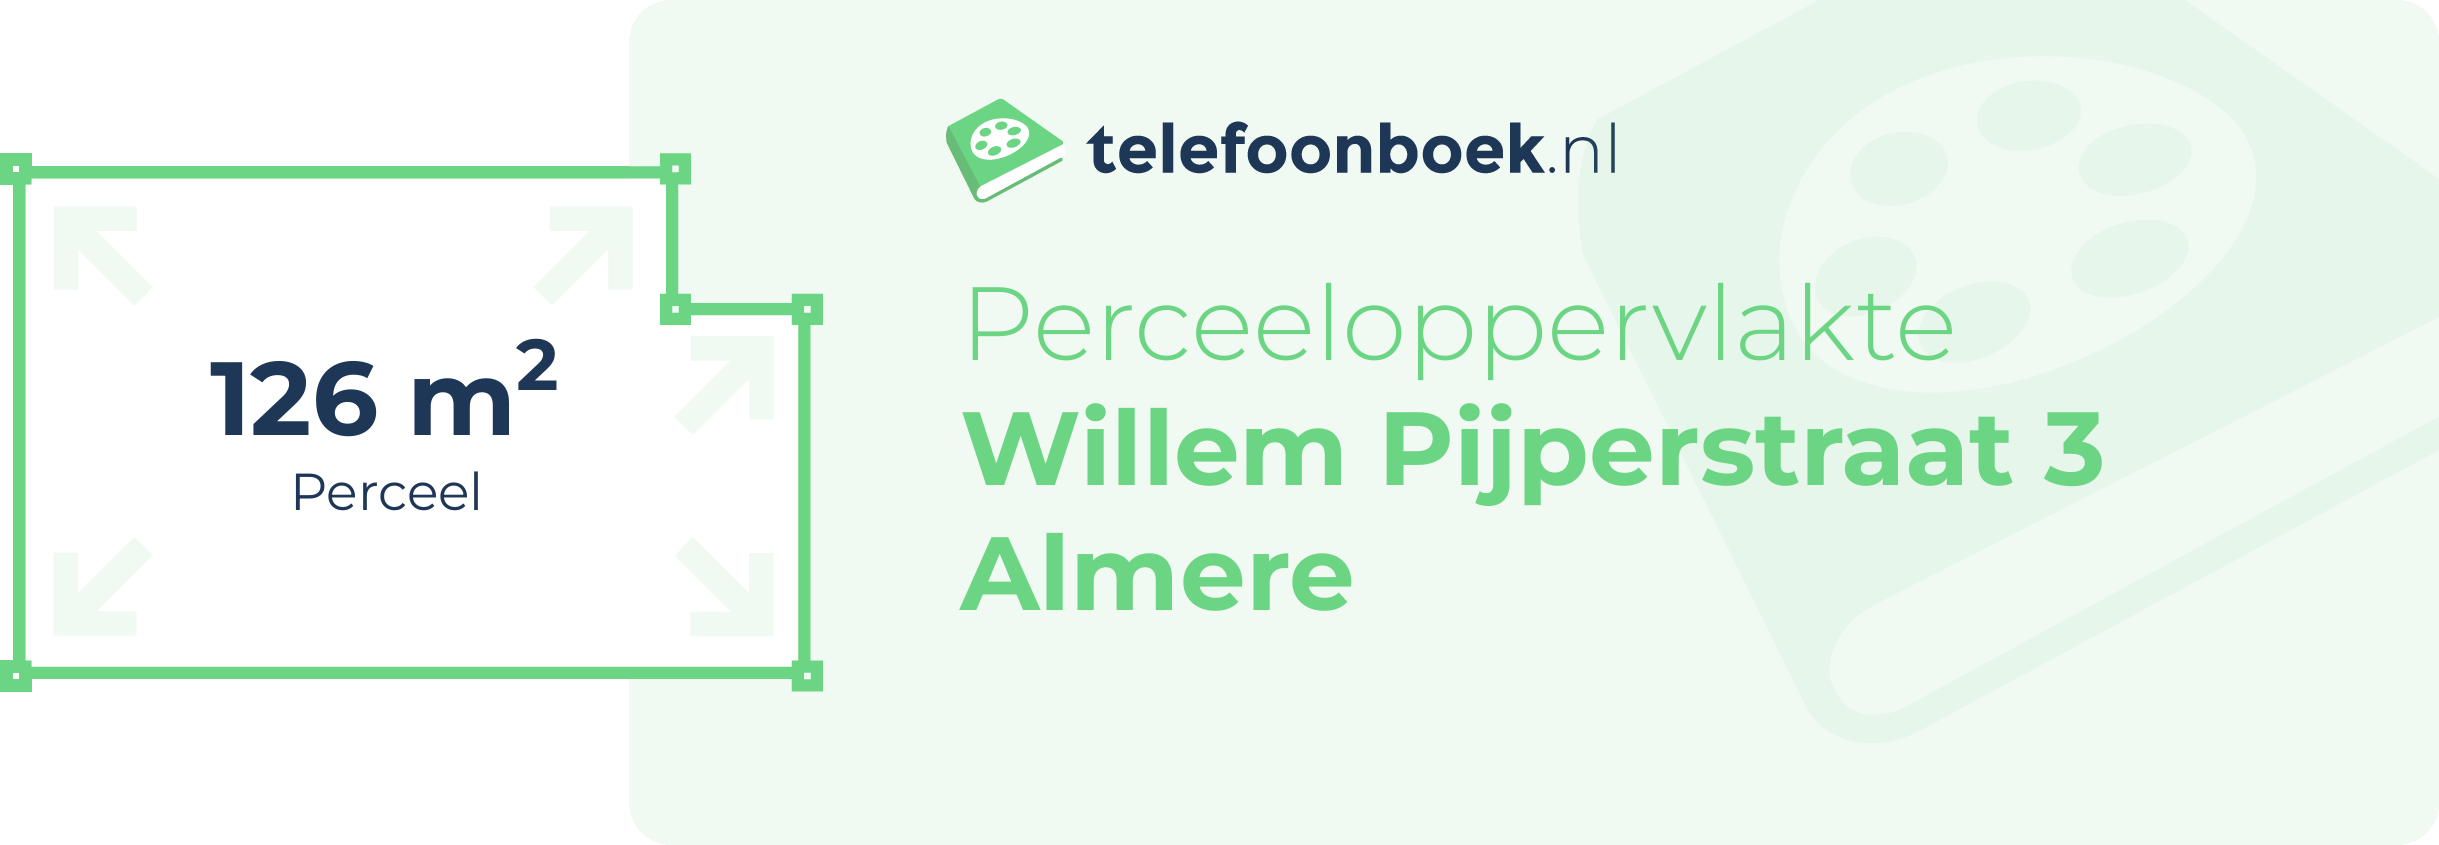 Perceeloppervlakte Willem Pijperstraat 3 Almere